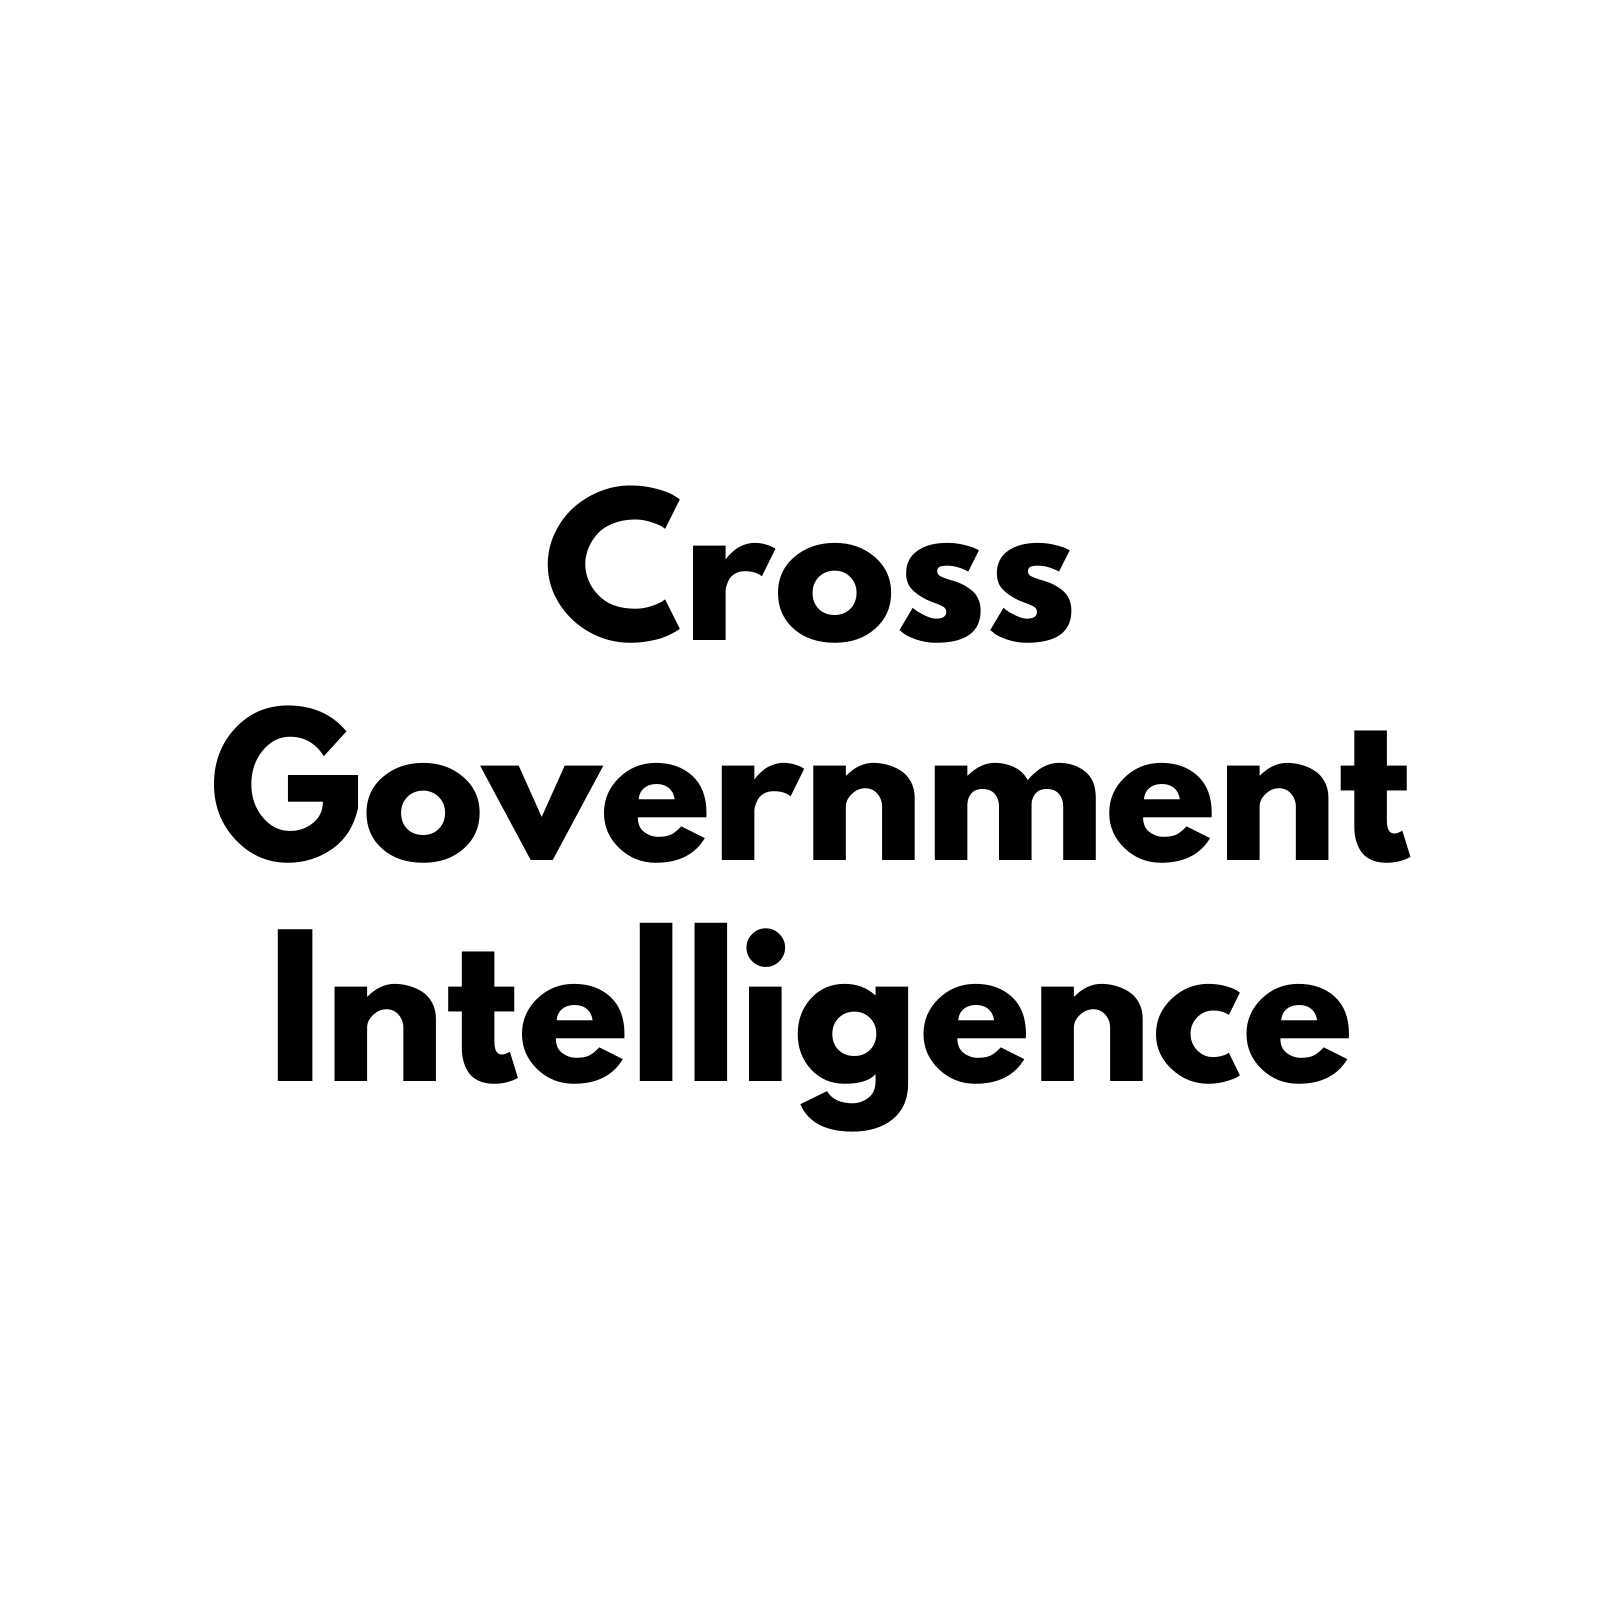 Cross Government Intelligence